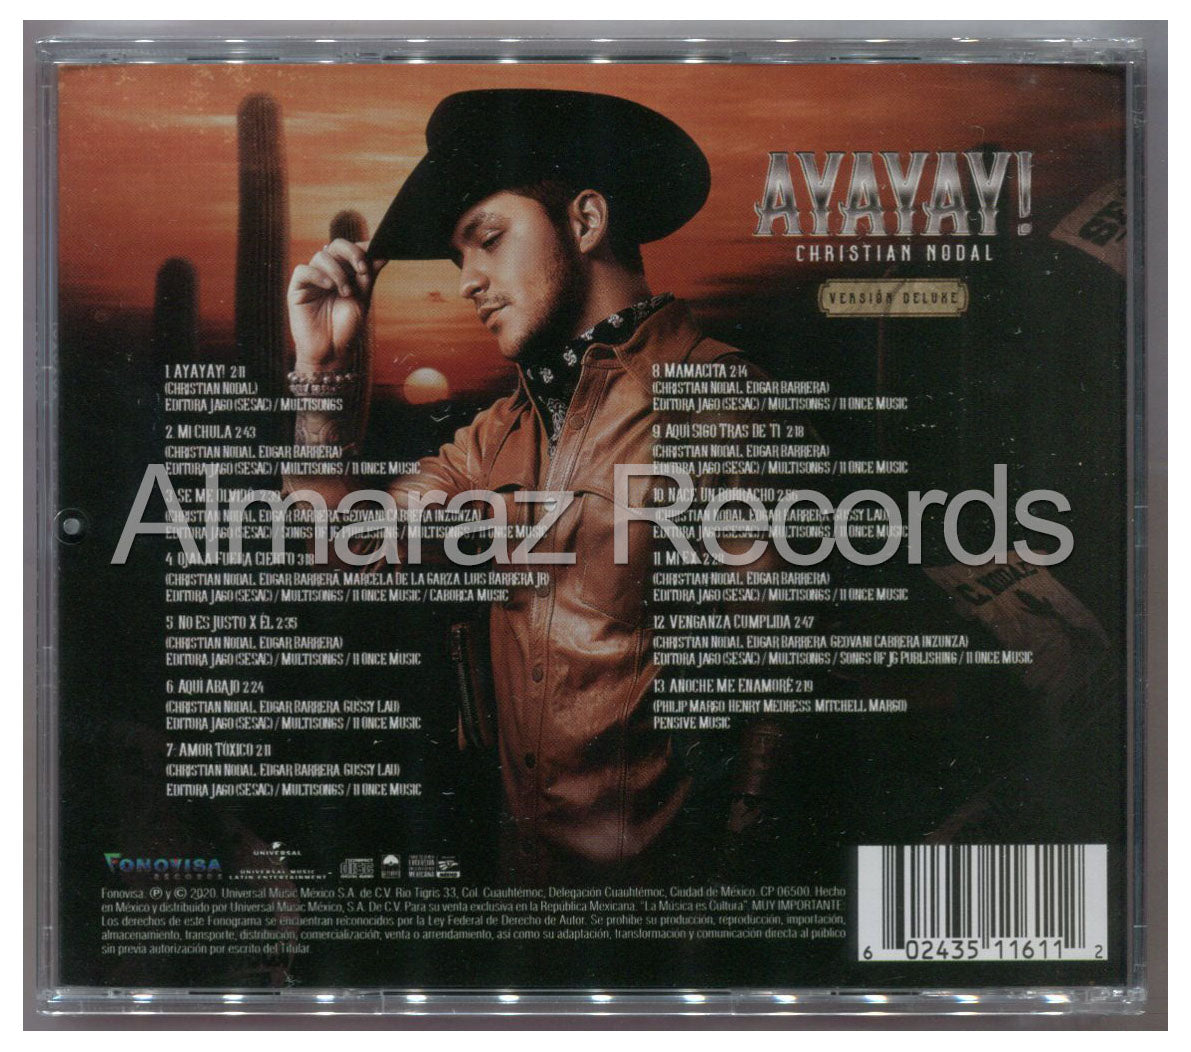 Christian Nodal Ayayay Version Deluxe CD